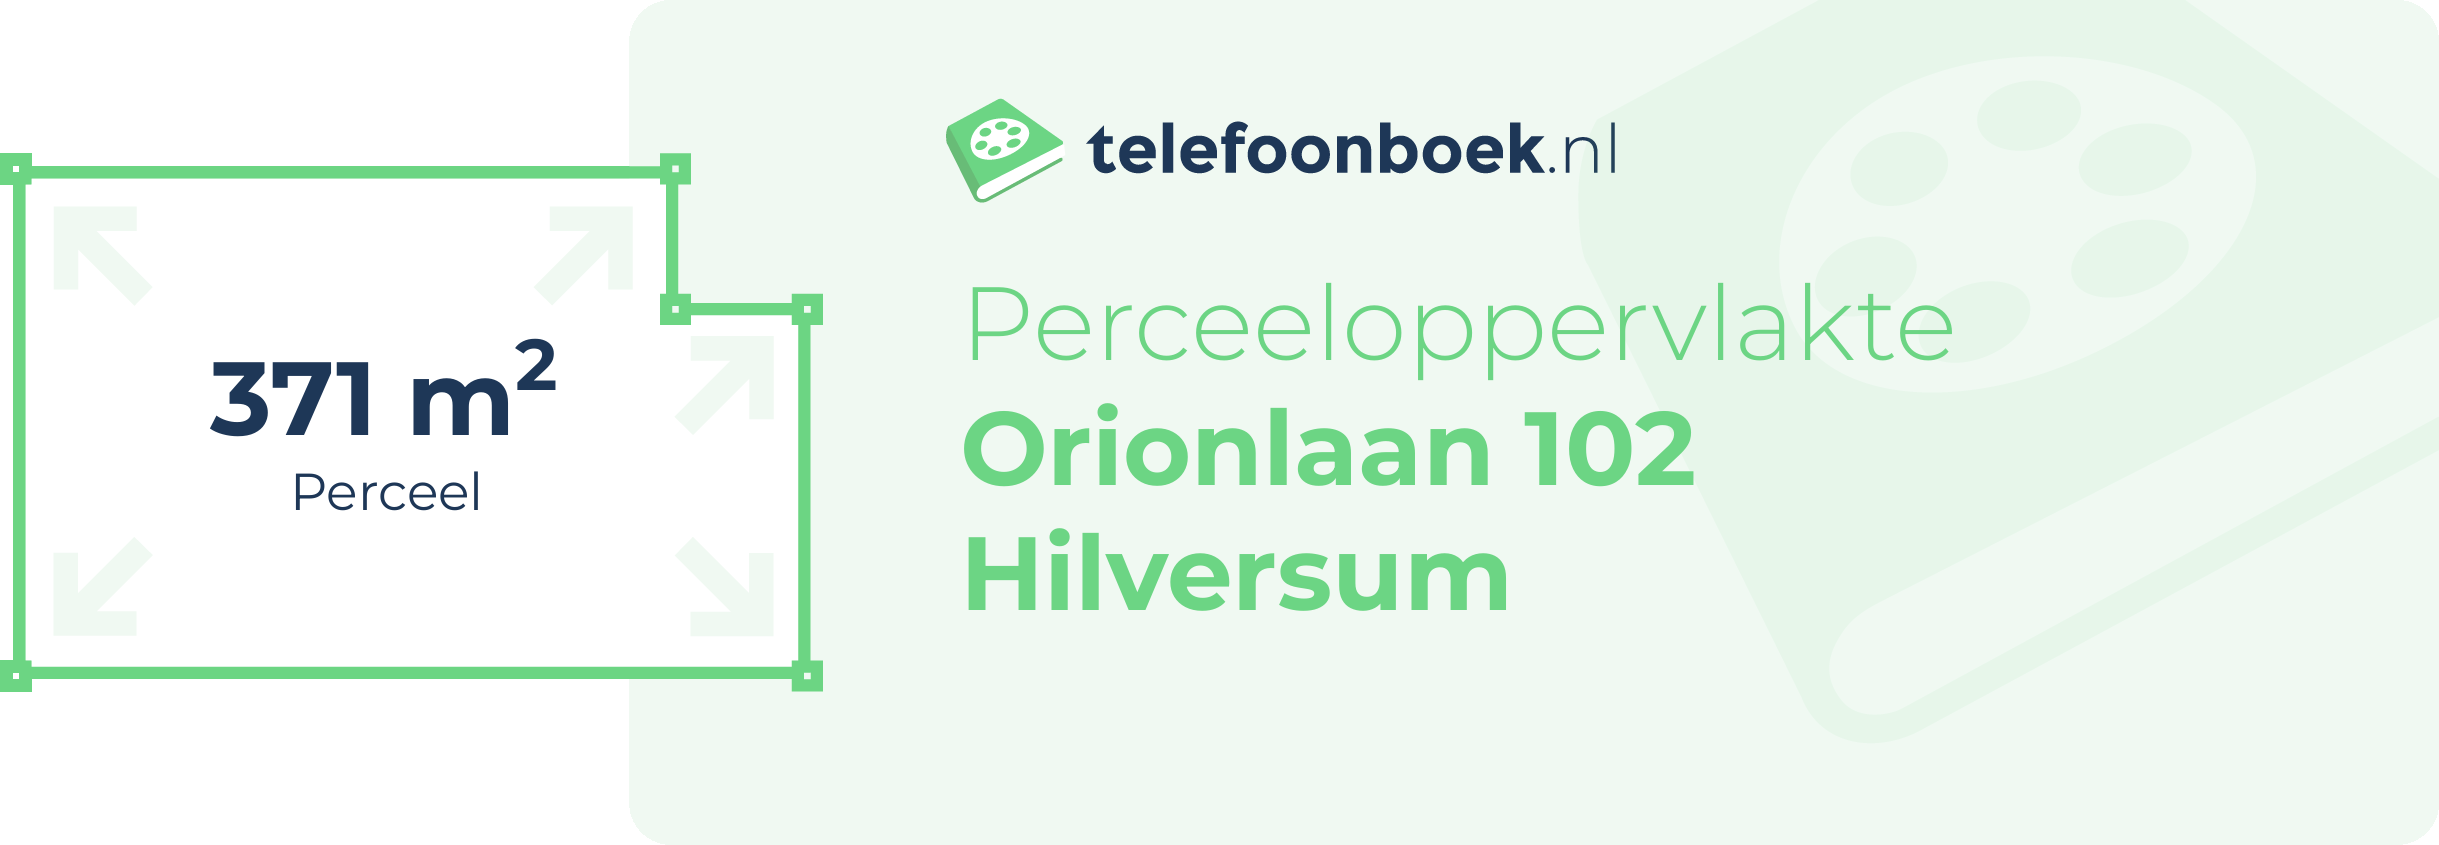 Perceeloppervlakte Orionlaan 102 Hilversum